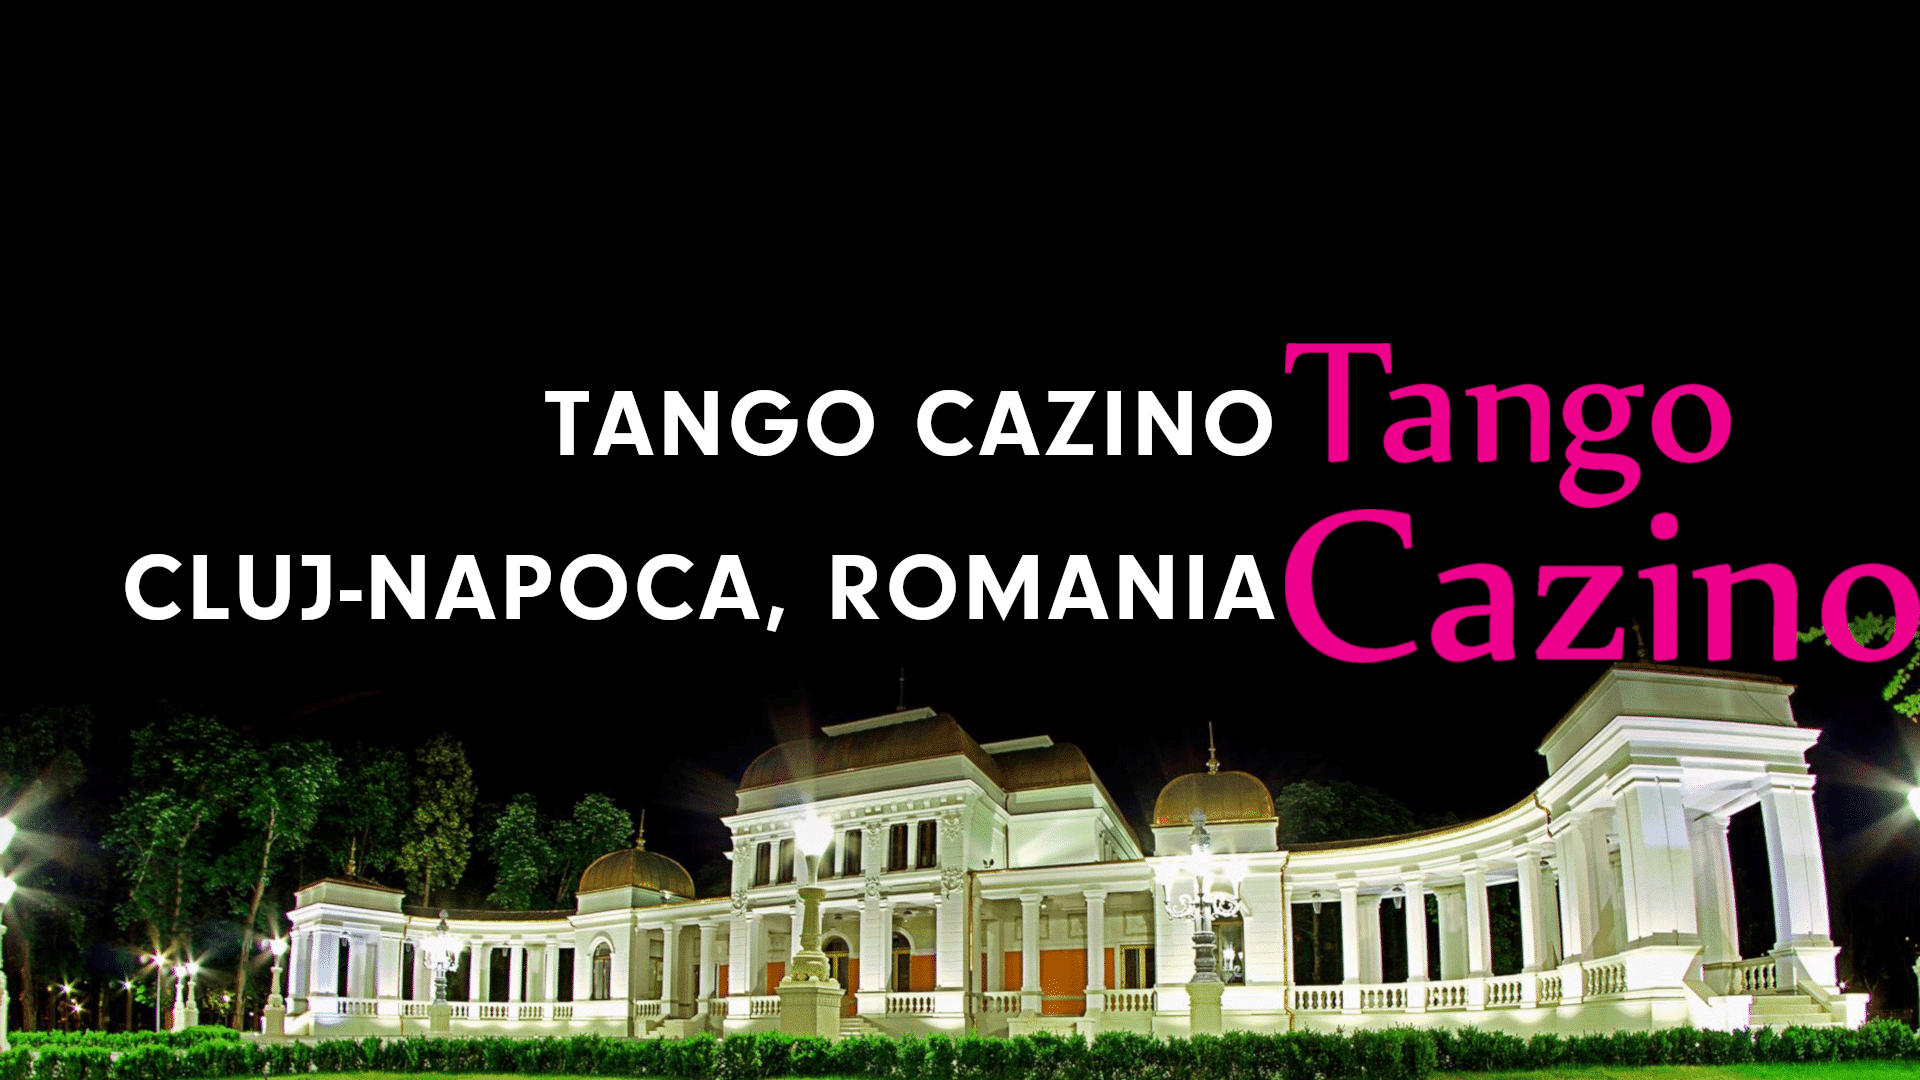 Tango Cazino Festival